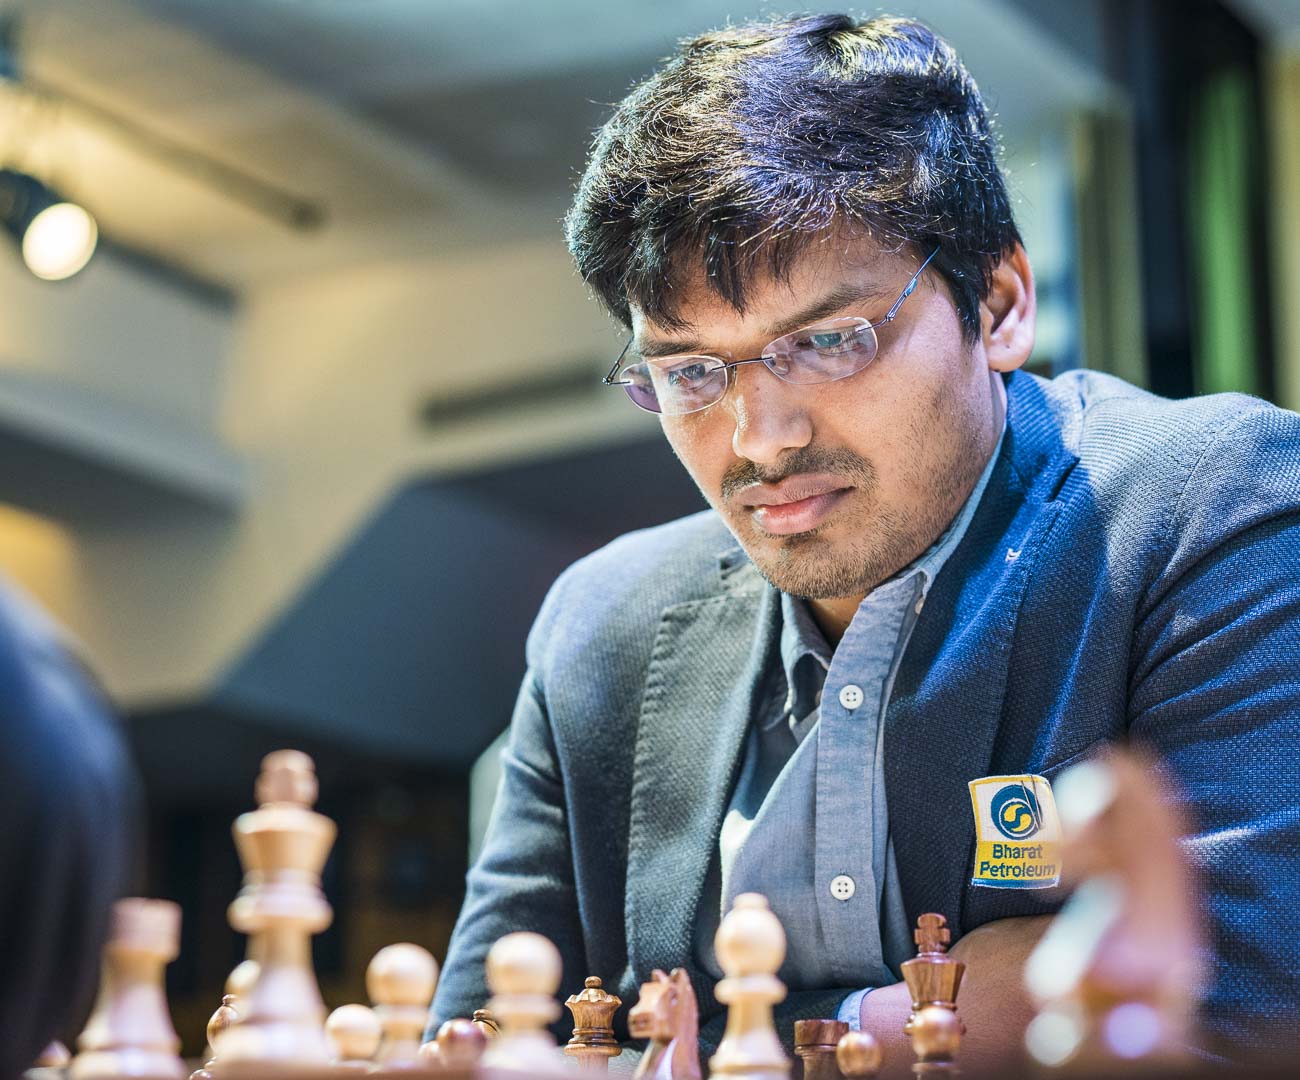 Hari finishes second, Nakamura reigns supreme at Tata Steel Chess